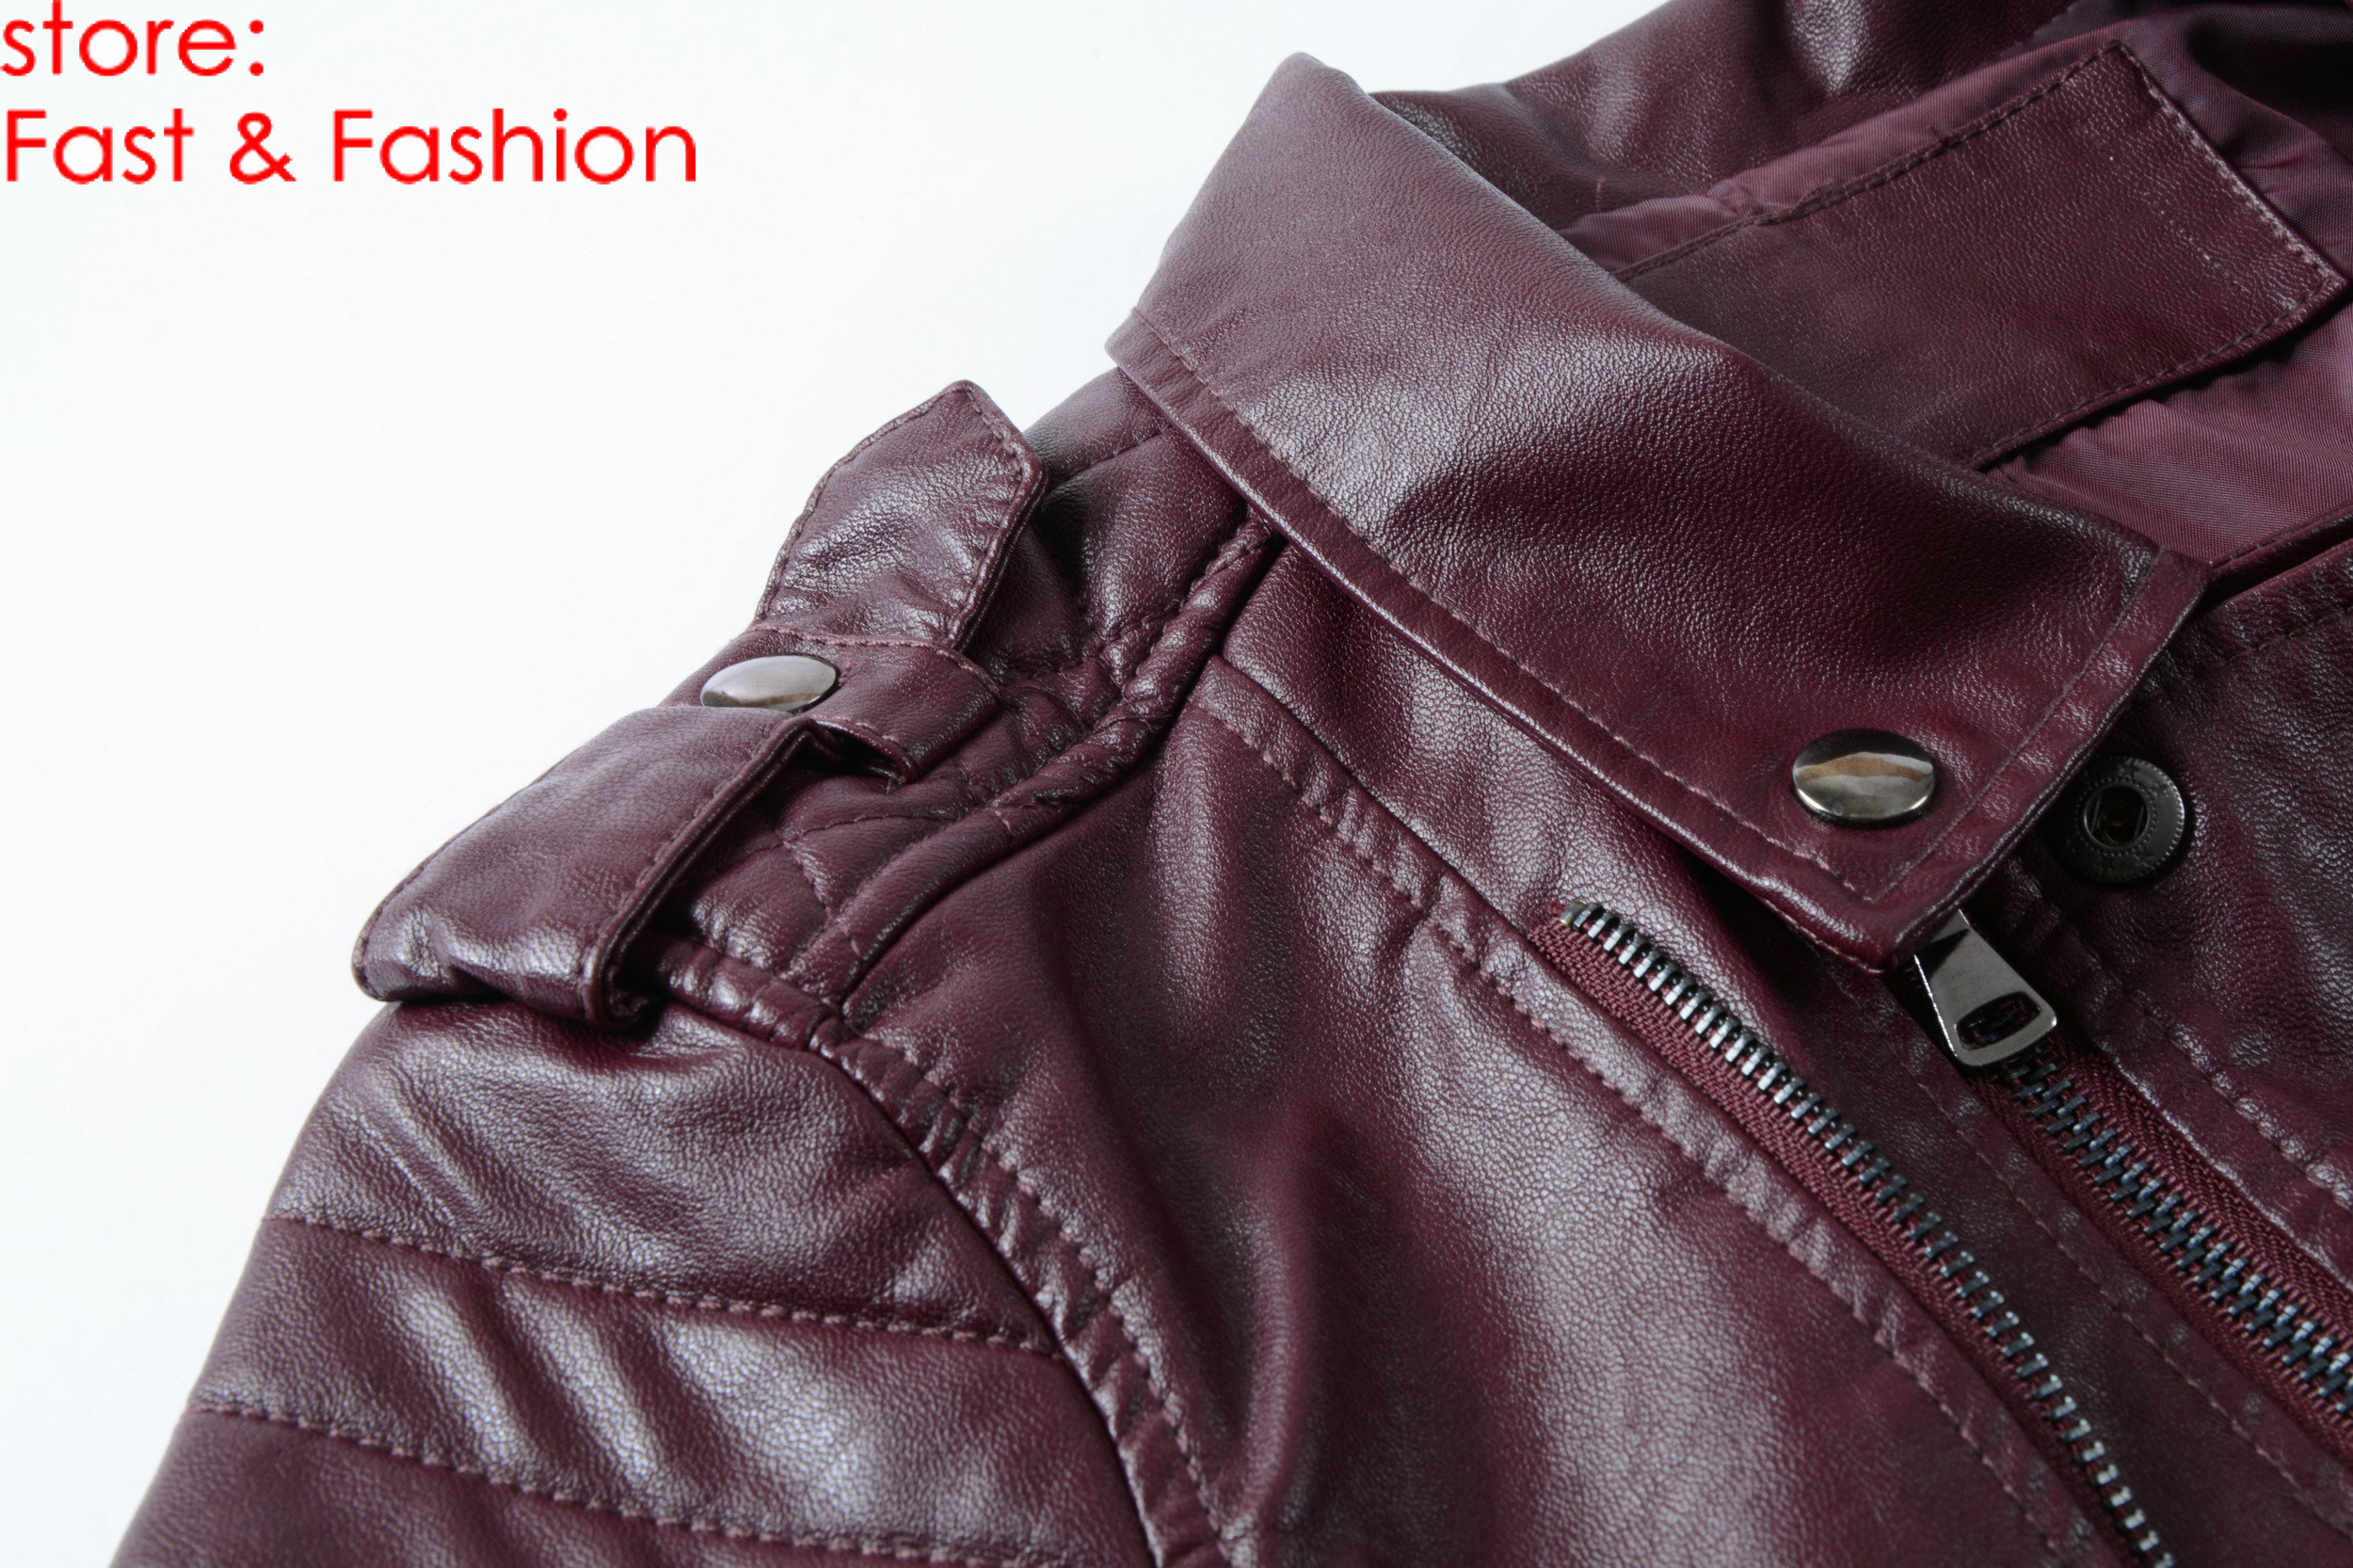 2019-New-Fashion-Women-Spring-Autumn-Soft-Faux-Leather-Jackets-Lady-Motorcyle-Zippers-Biker-Blue-Coa-32266935625